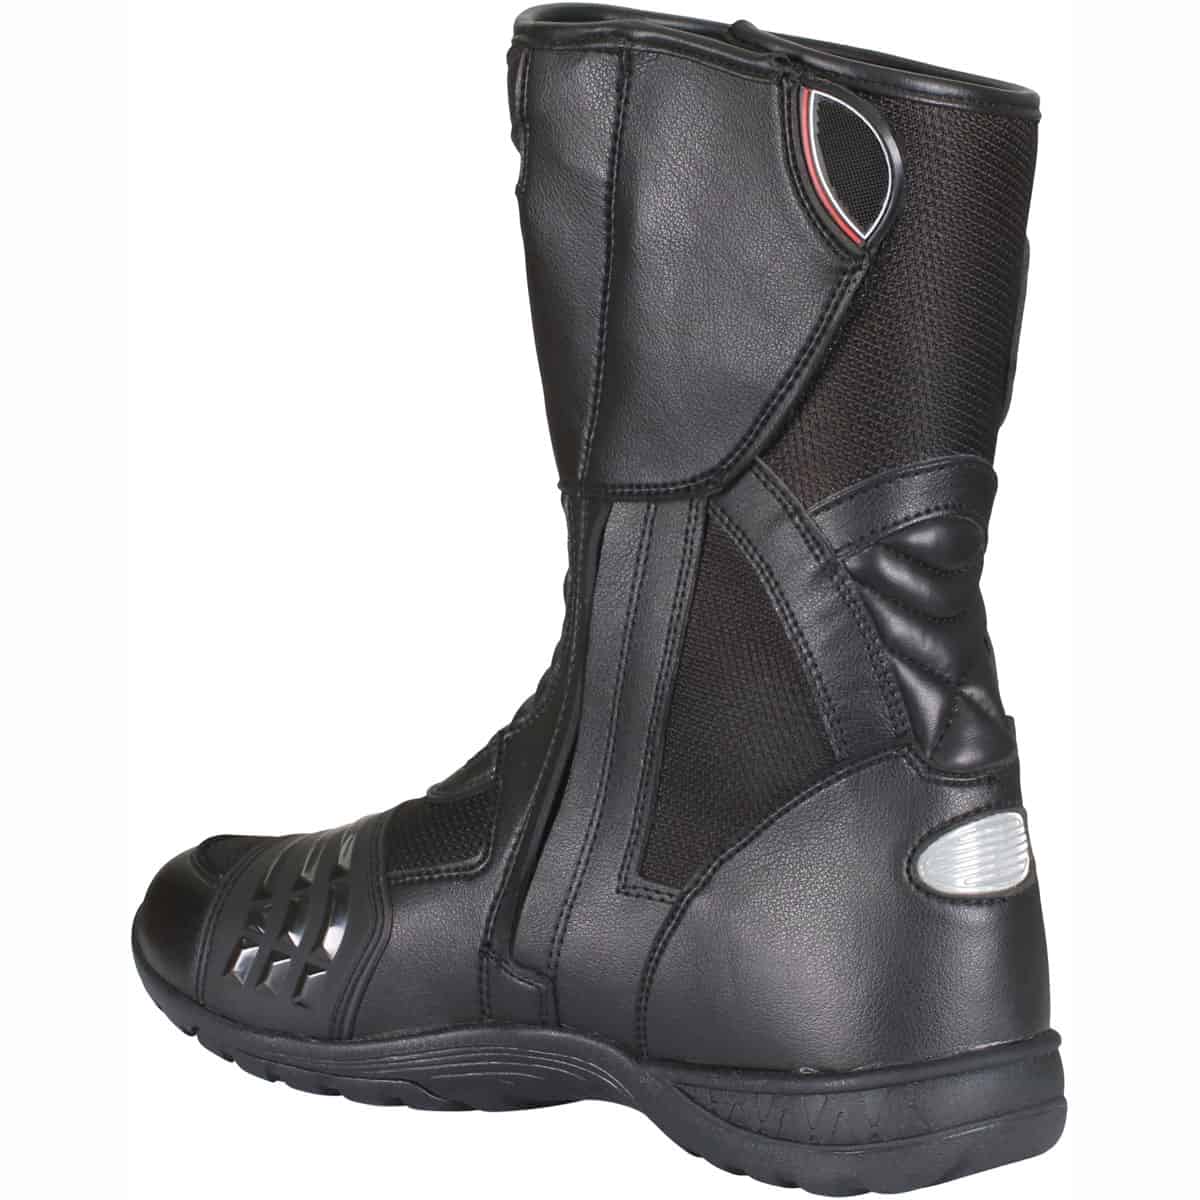 Duchinni Atlas Waterproof Touring Boots WP - Black 2